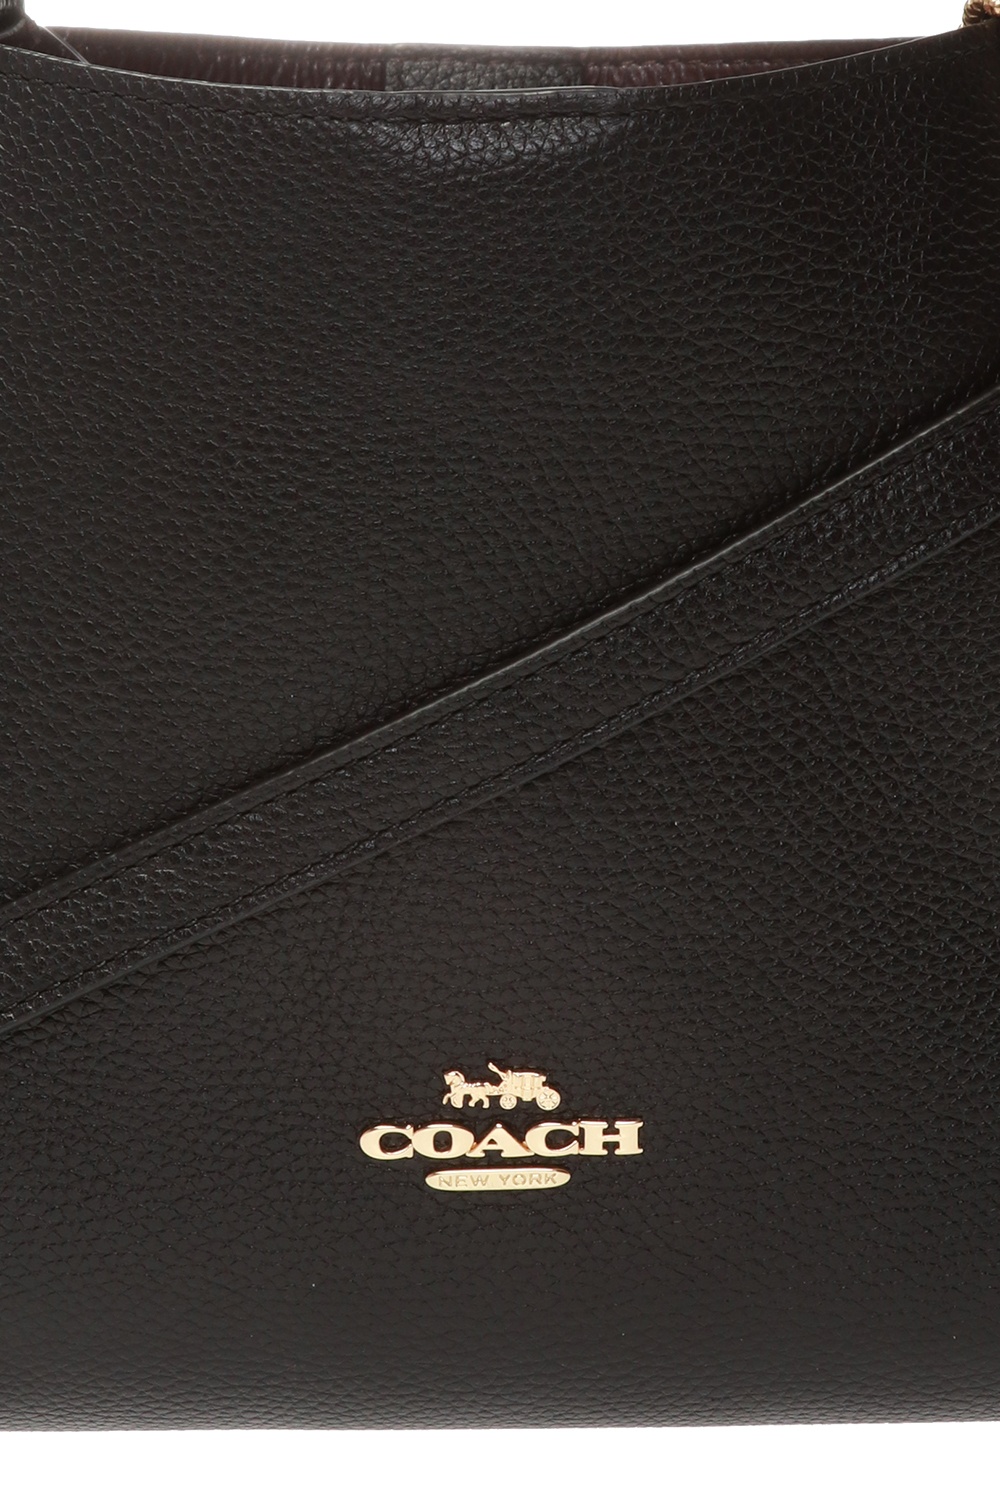 Black 'Hadley hobo 21' shoulder bag Coach - Vitkac GB